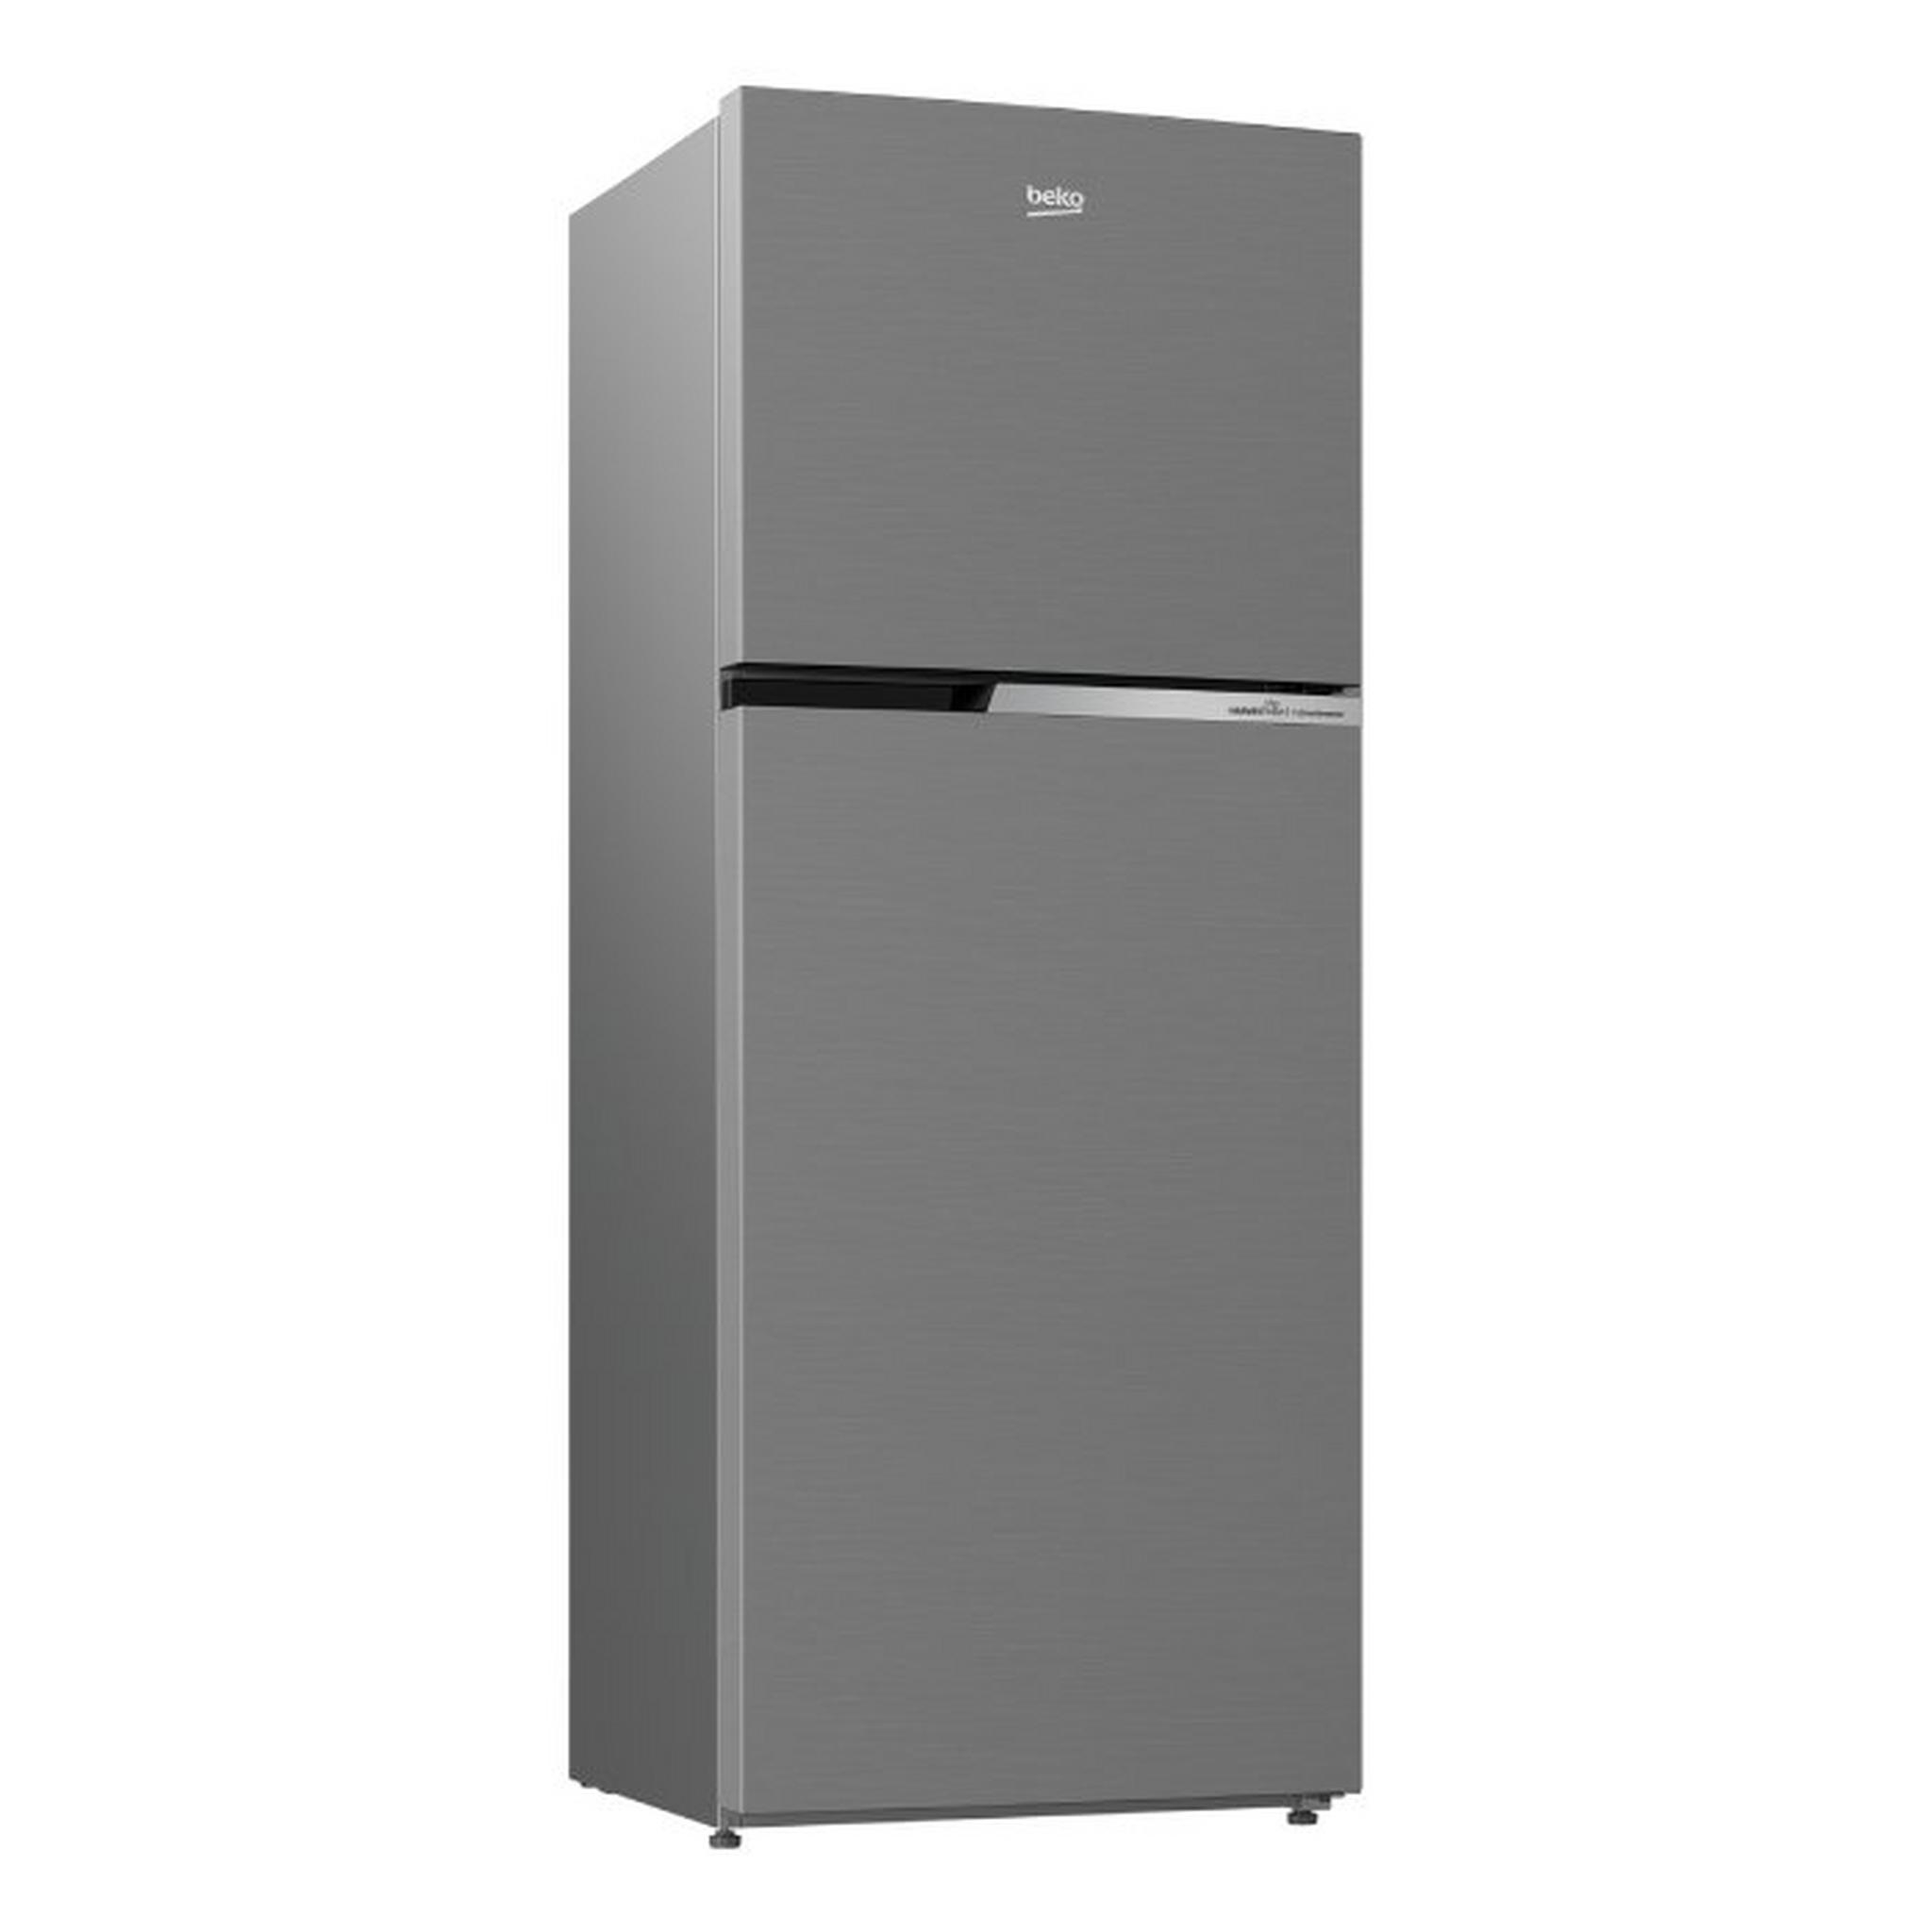 Beko 14.4 Cft. Top Mount Refrigerator (RDNT401XS)